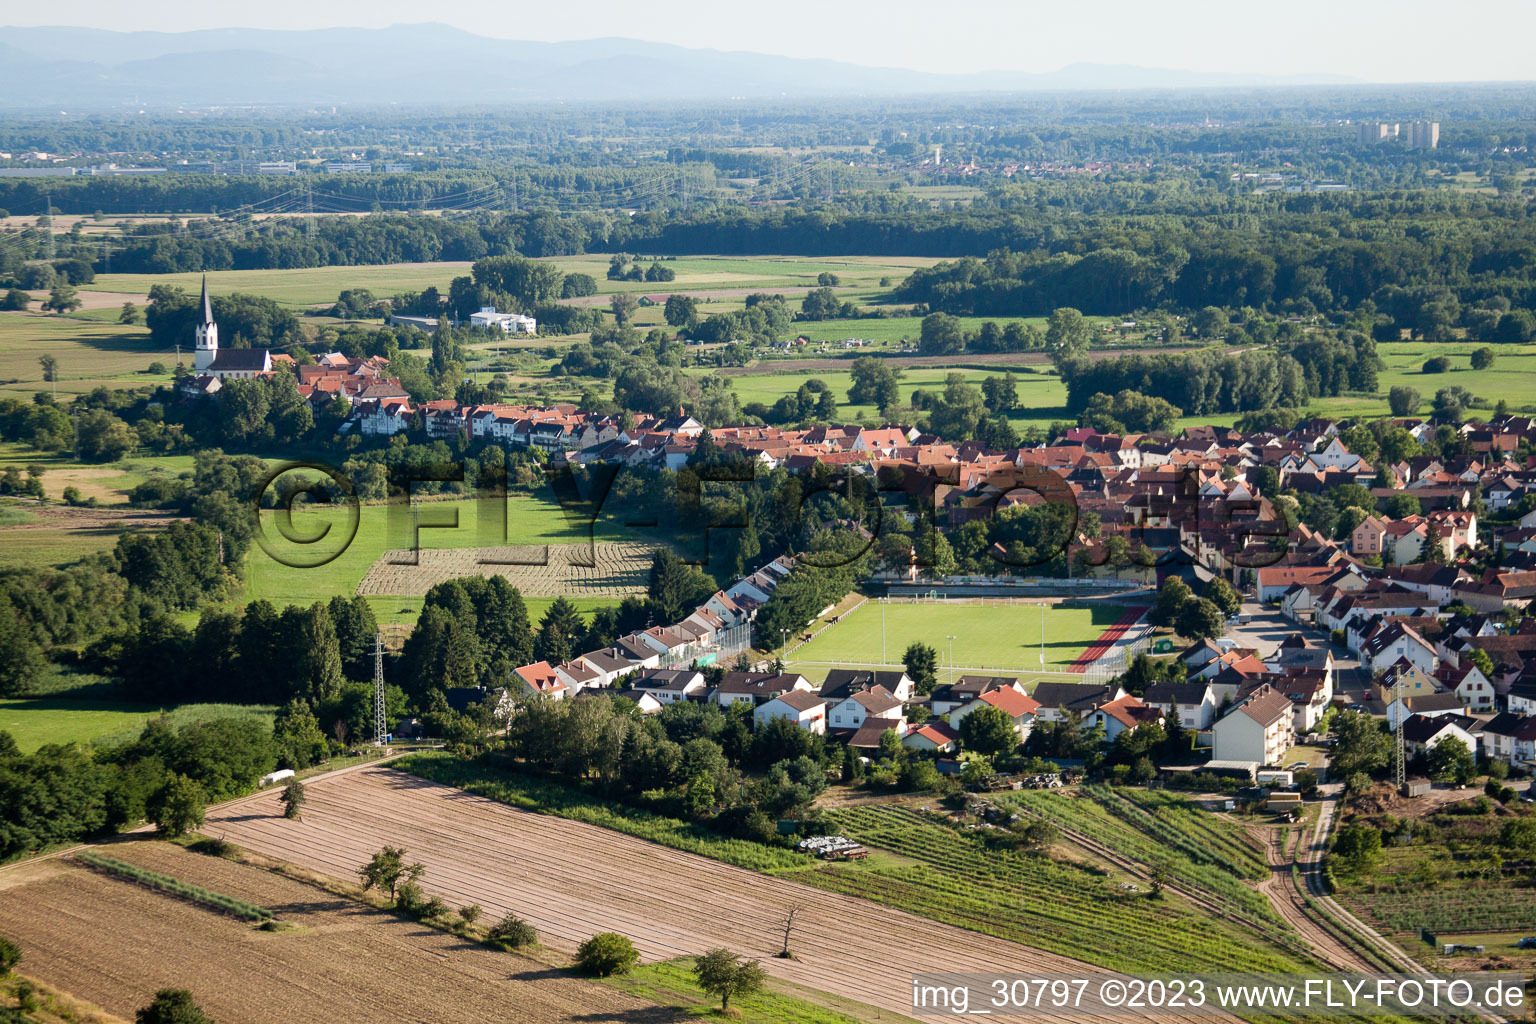 Sports fields in Jockgrim in the state Rhineland-Palatinate, Germany